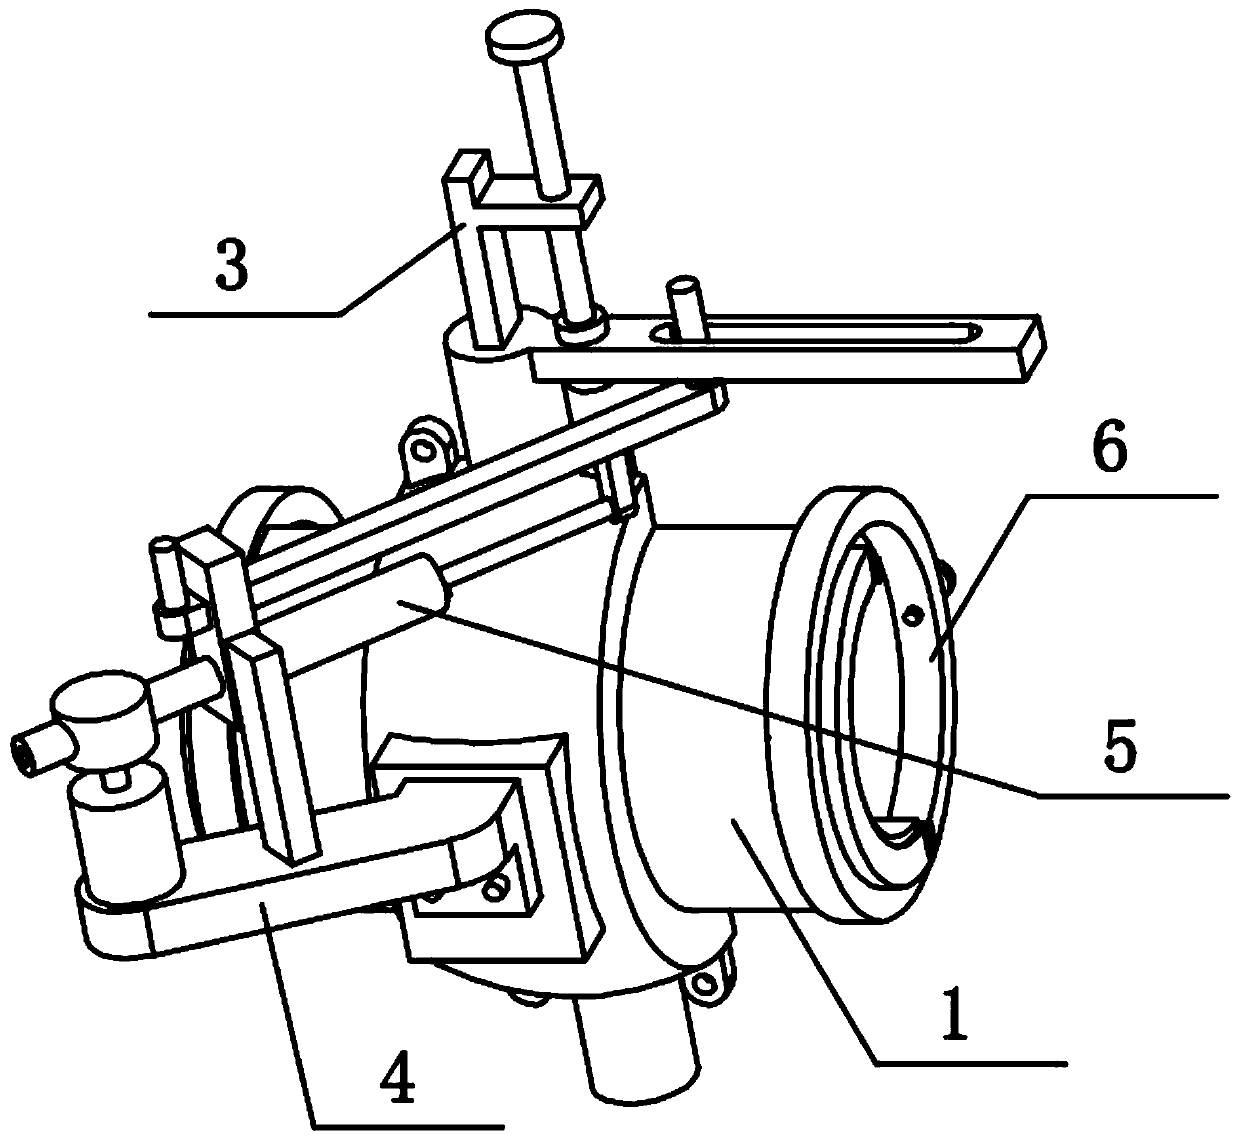 A pneumatic all-inclusive ball valve